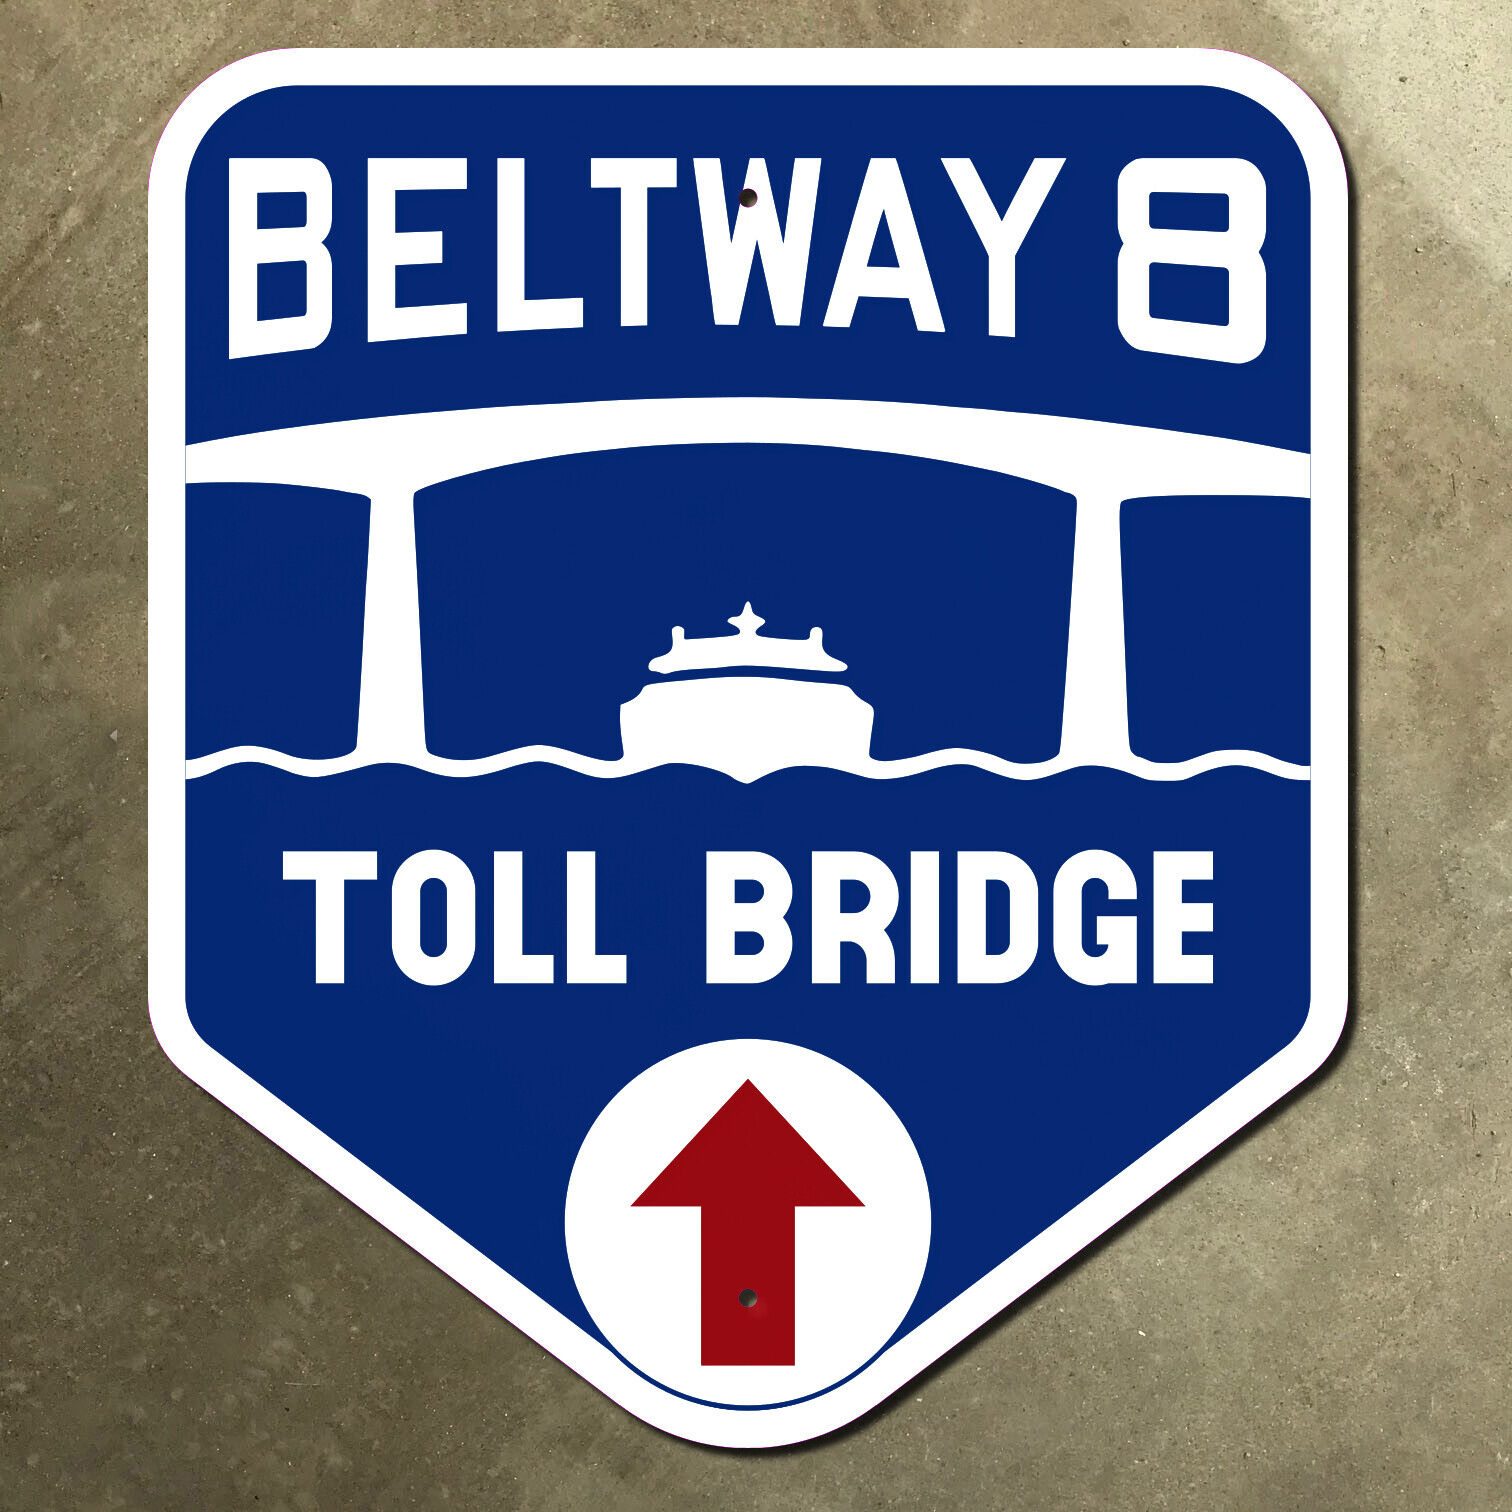 Texas Houston Ship Channel Bridge beltway 8 highway marker road sign 1982 18x21